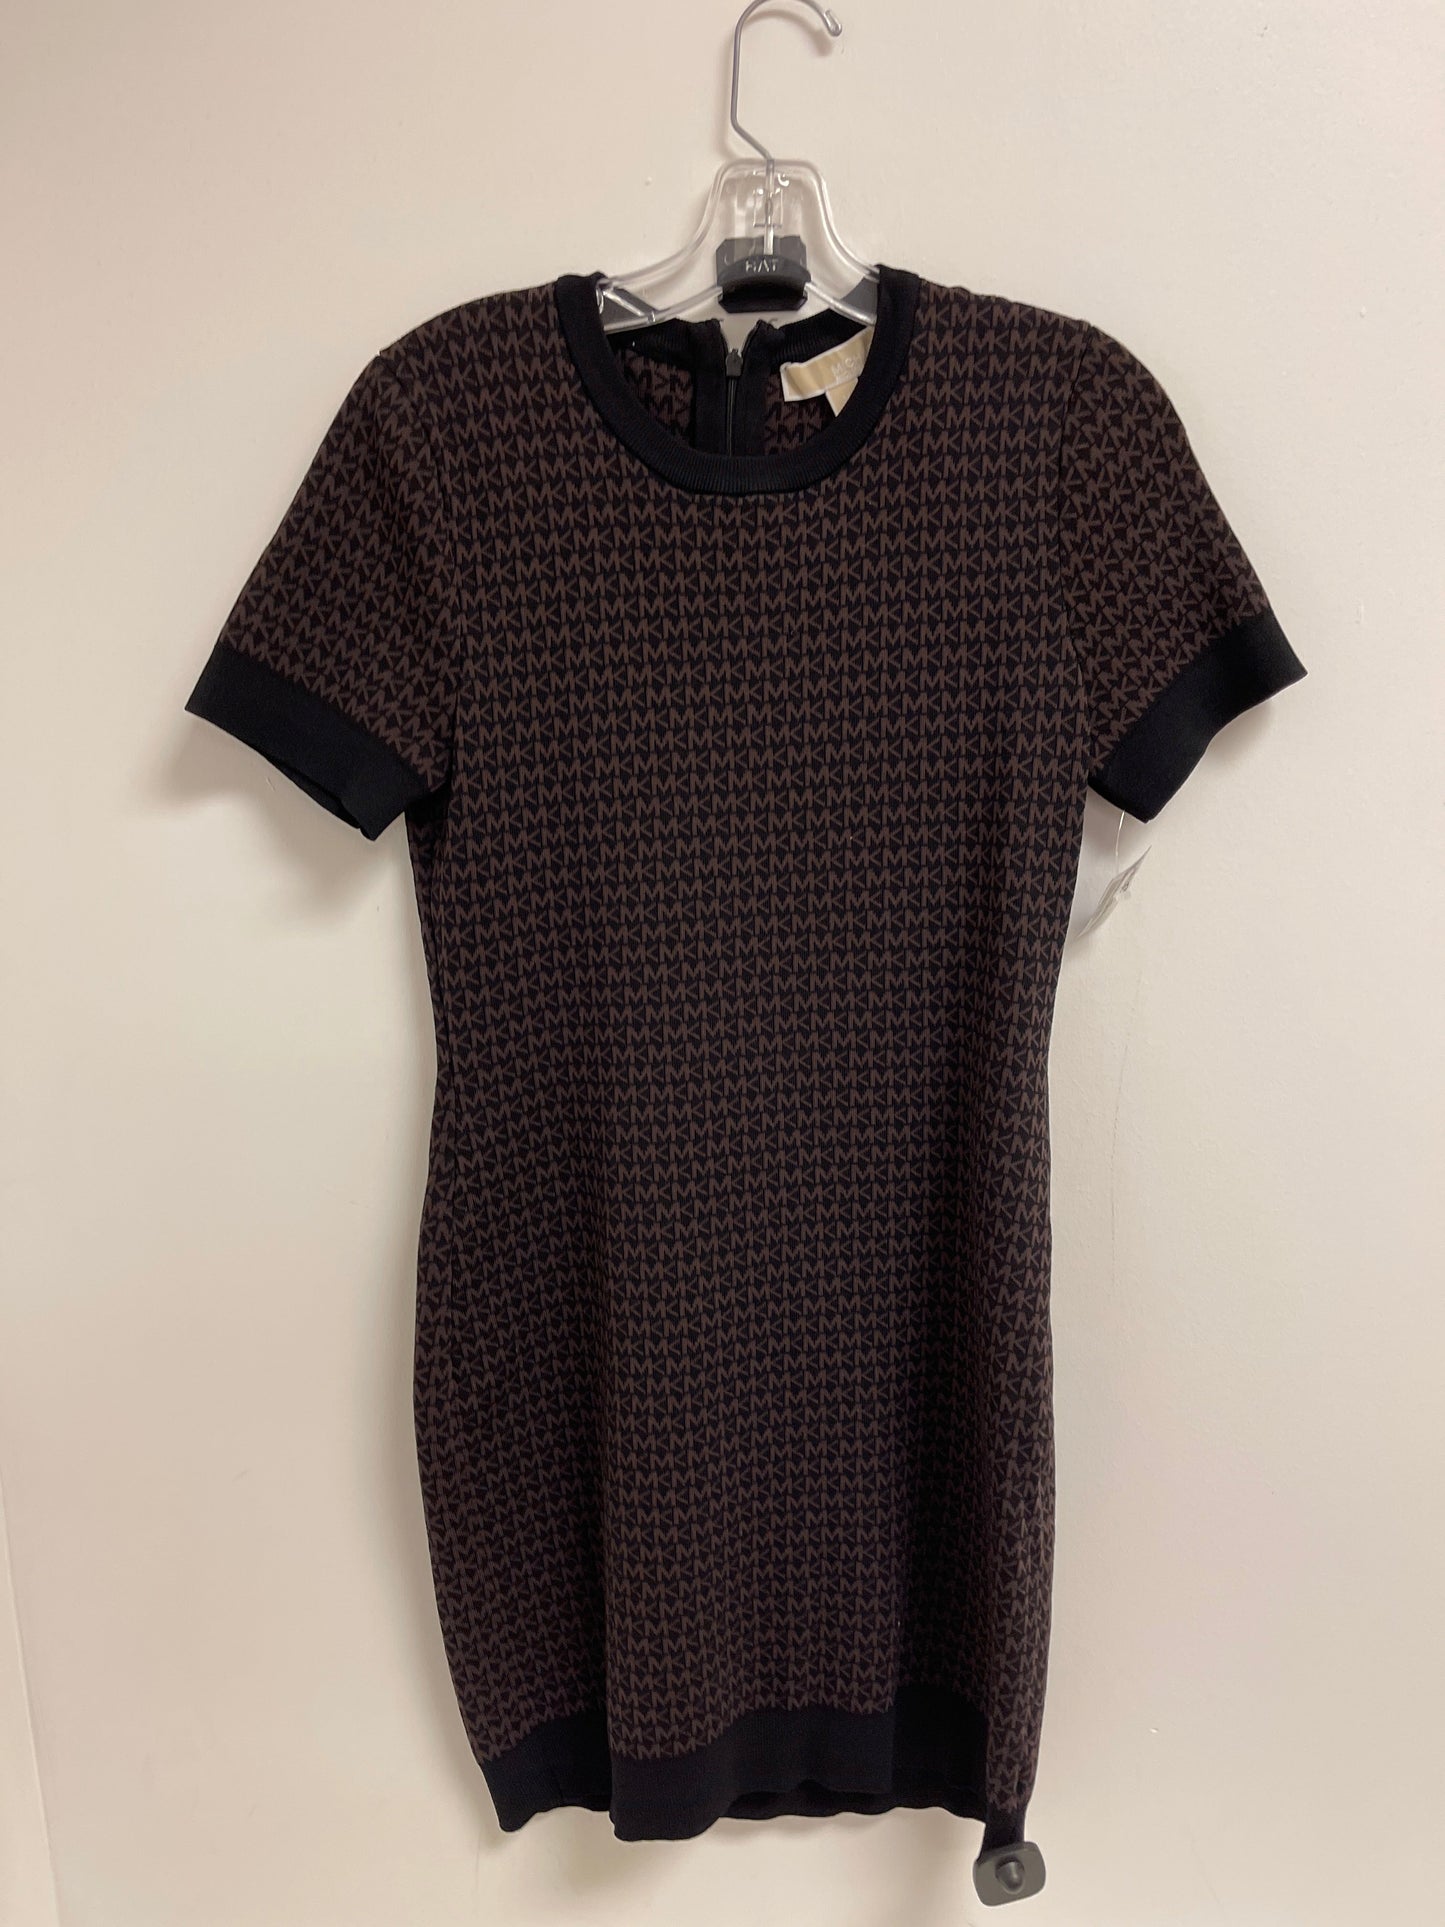 Brown Dress Designer Michael By Michael Kors, Size M